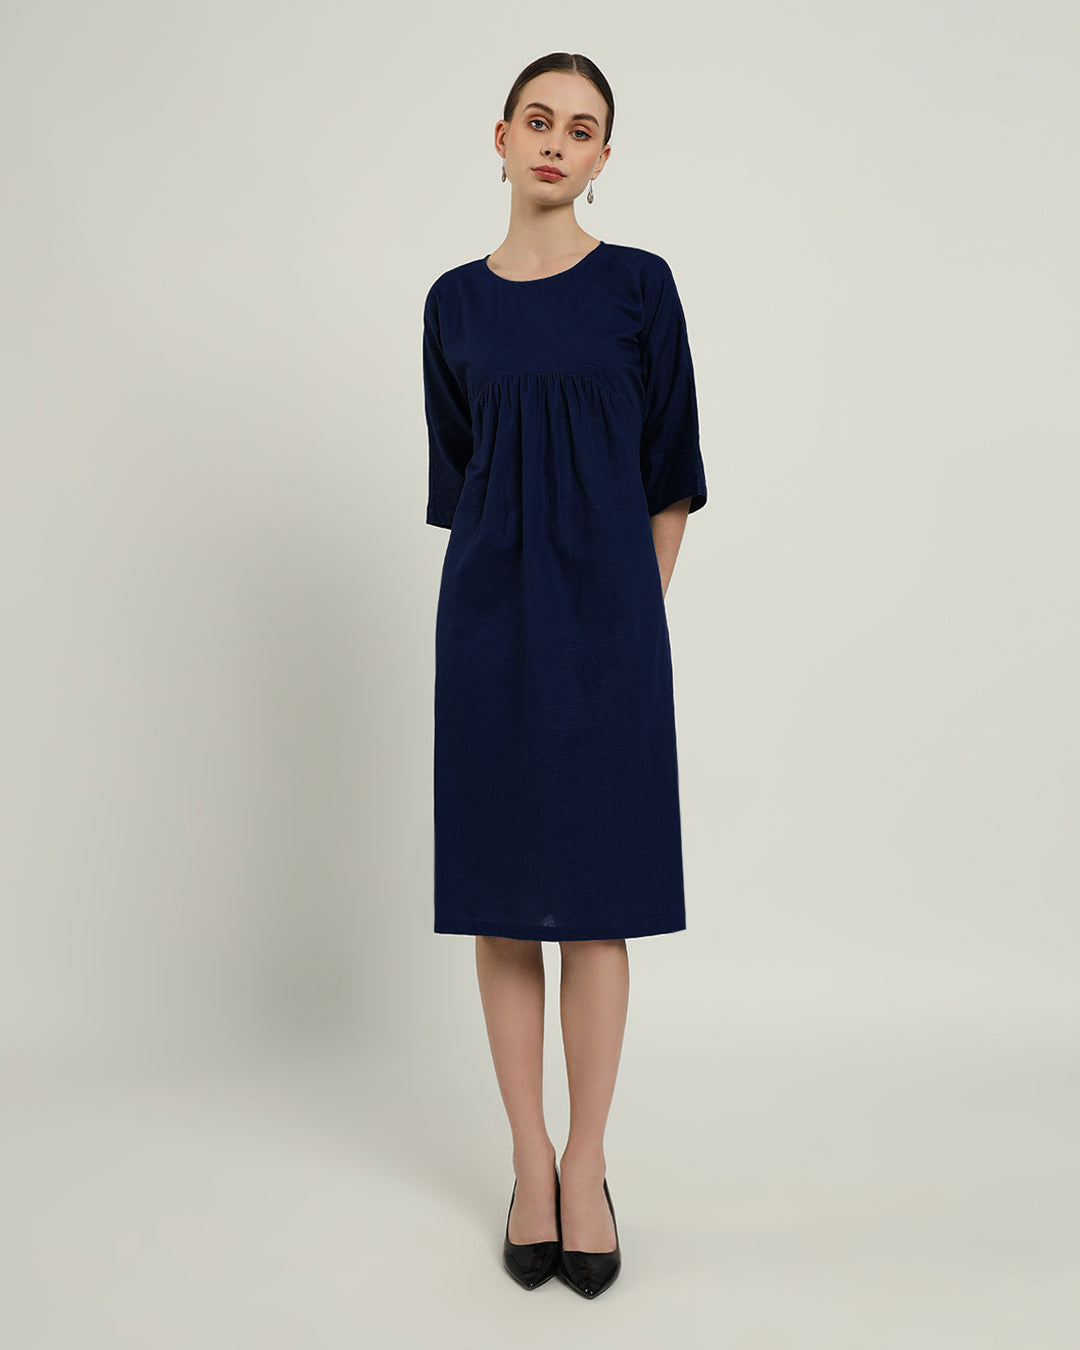 The Monrovia Daisy Midnight Blue Linen Dress